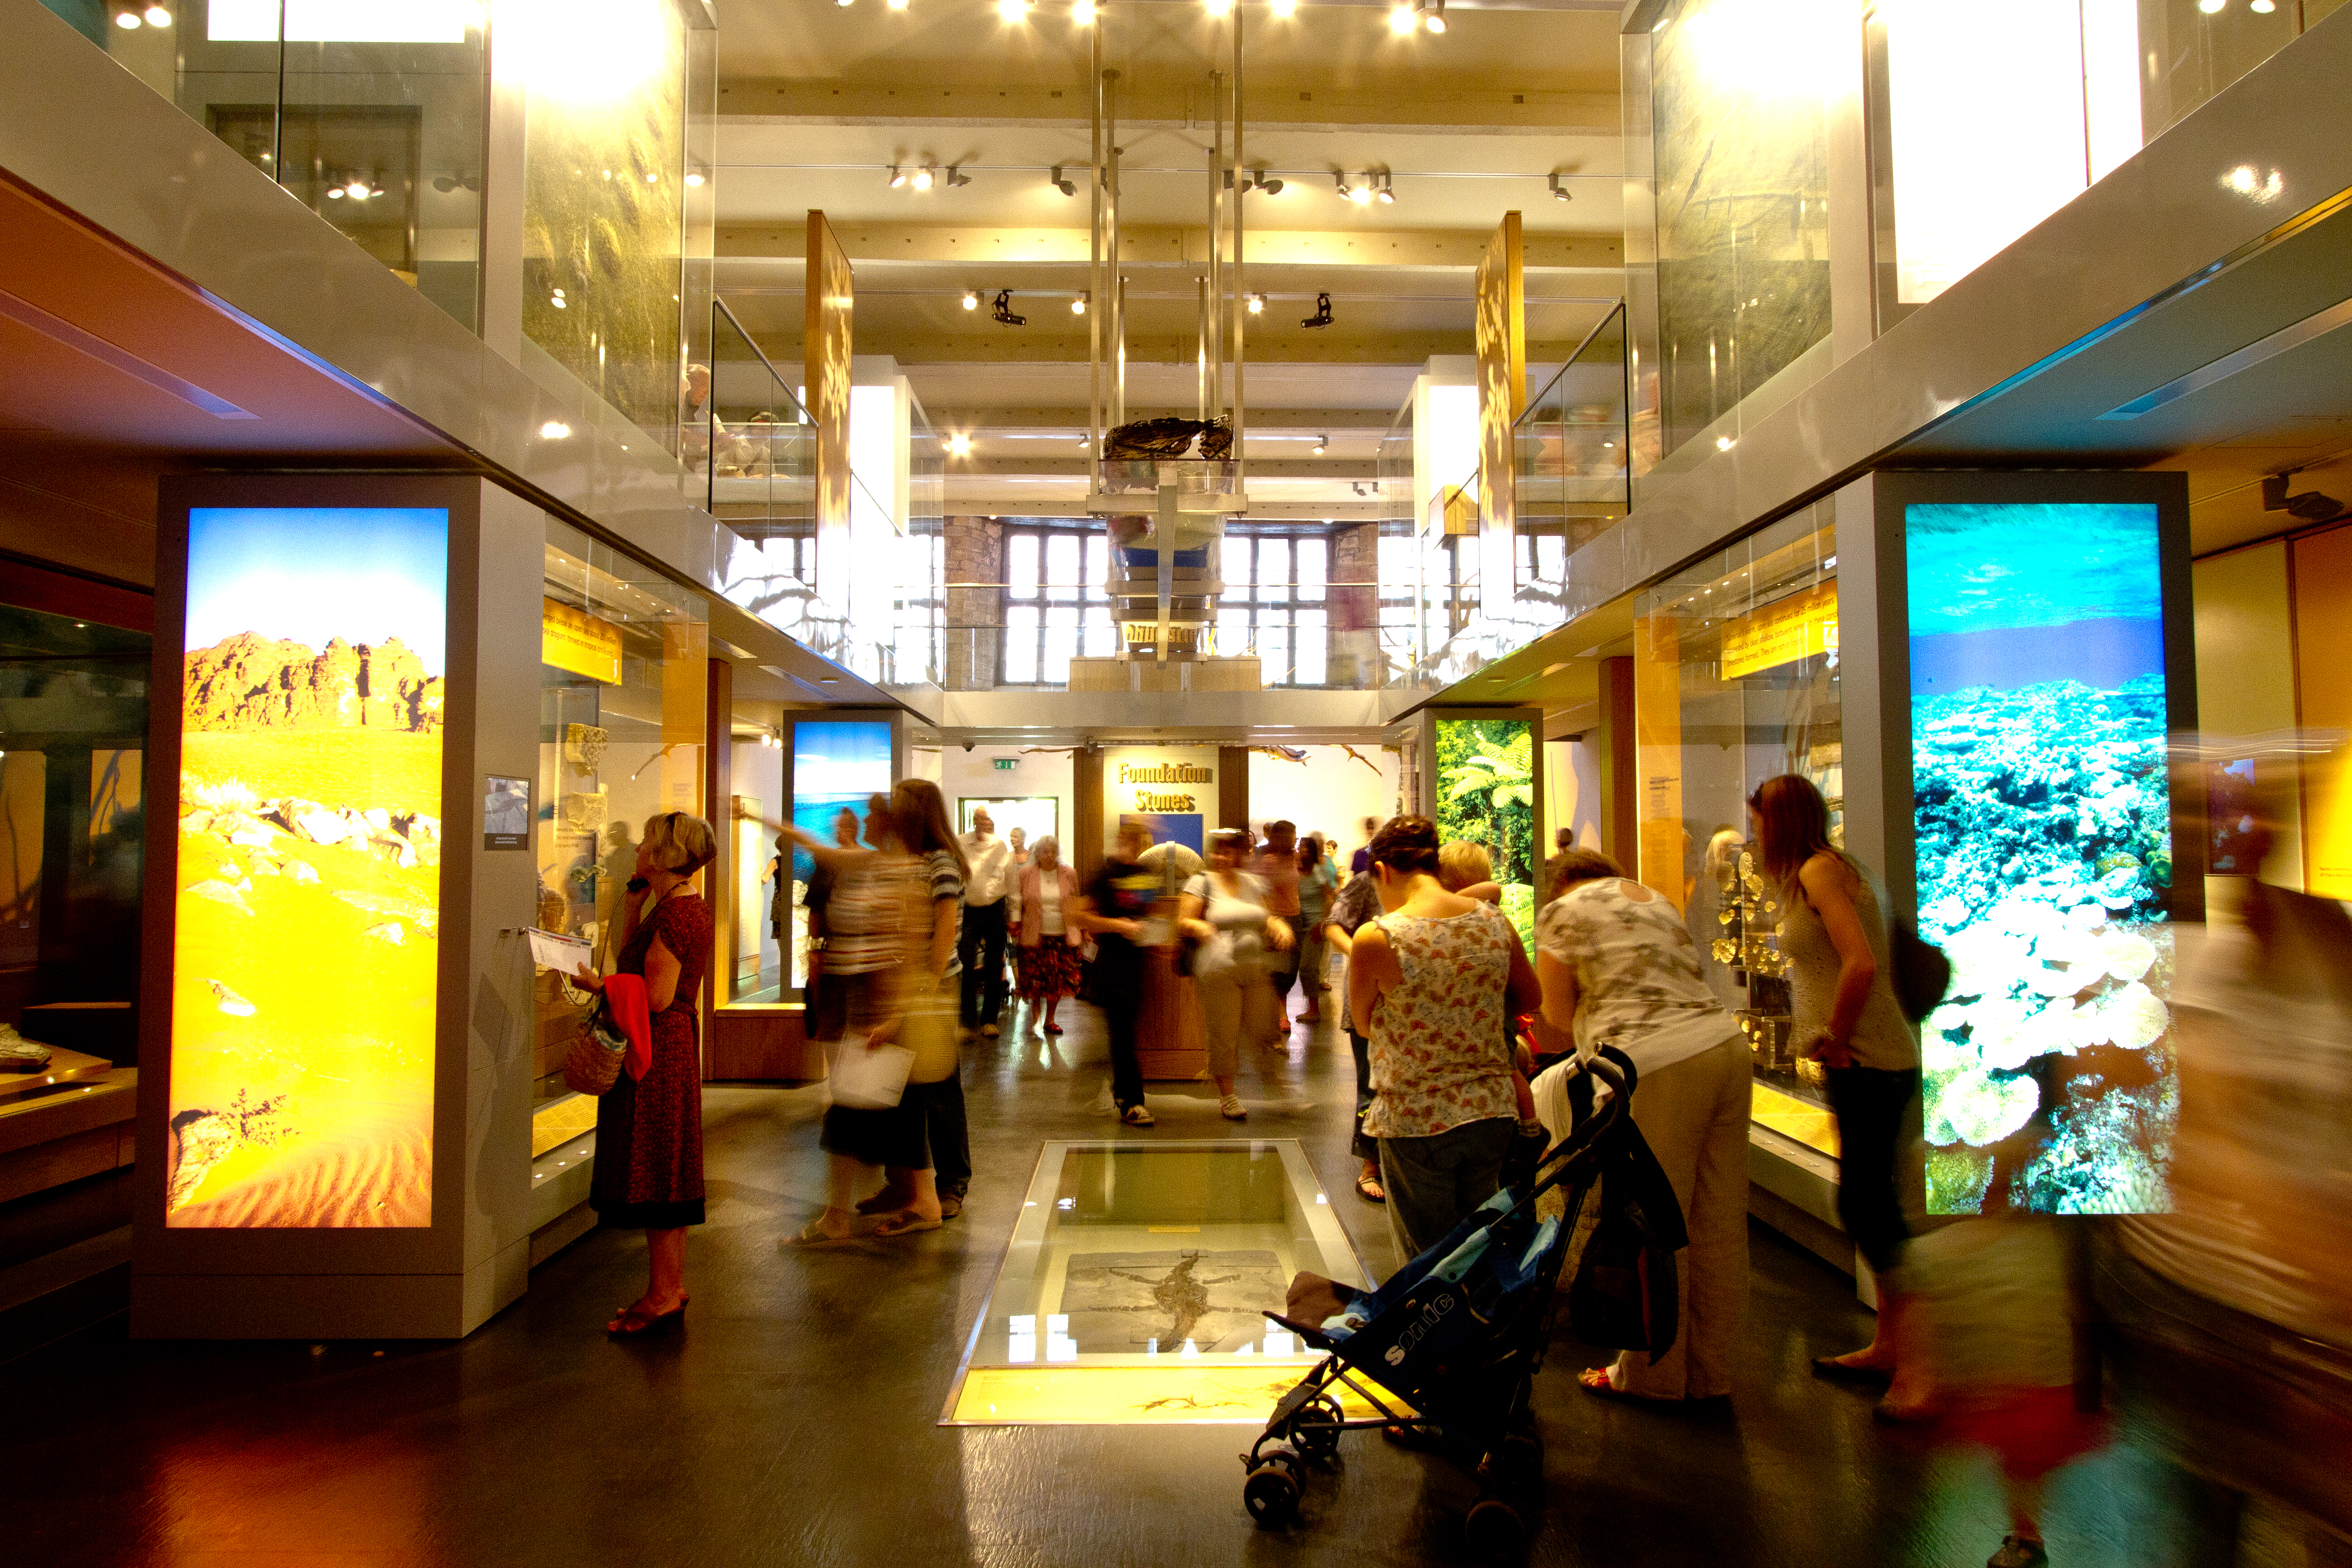 Visitors look at displays in Museum of Somerset